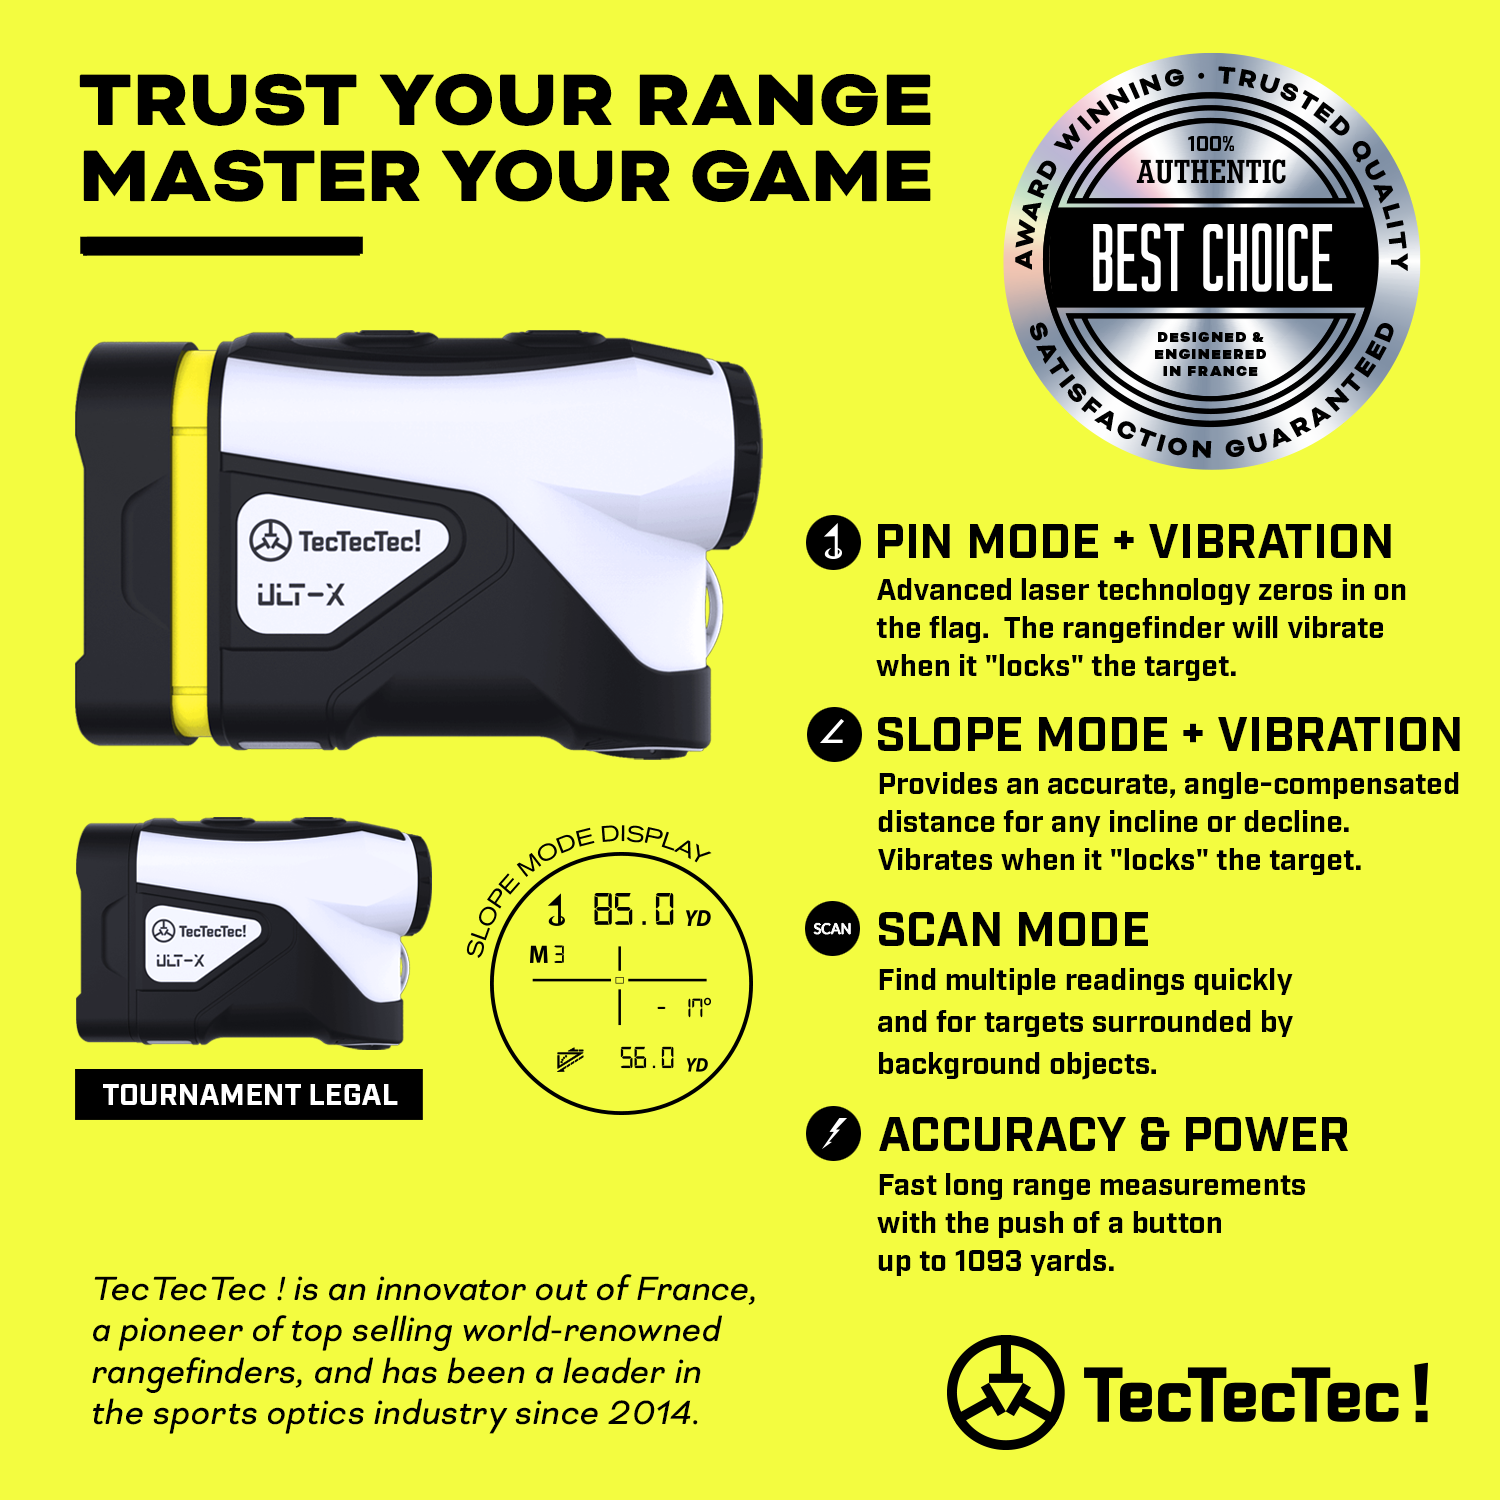 Rangefinder ULT-X TecTecTec Golf - Laser measurement up to 1000 yd